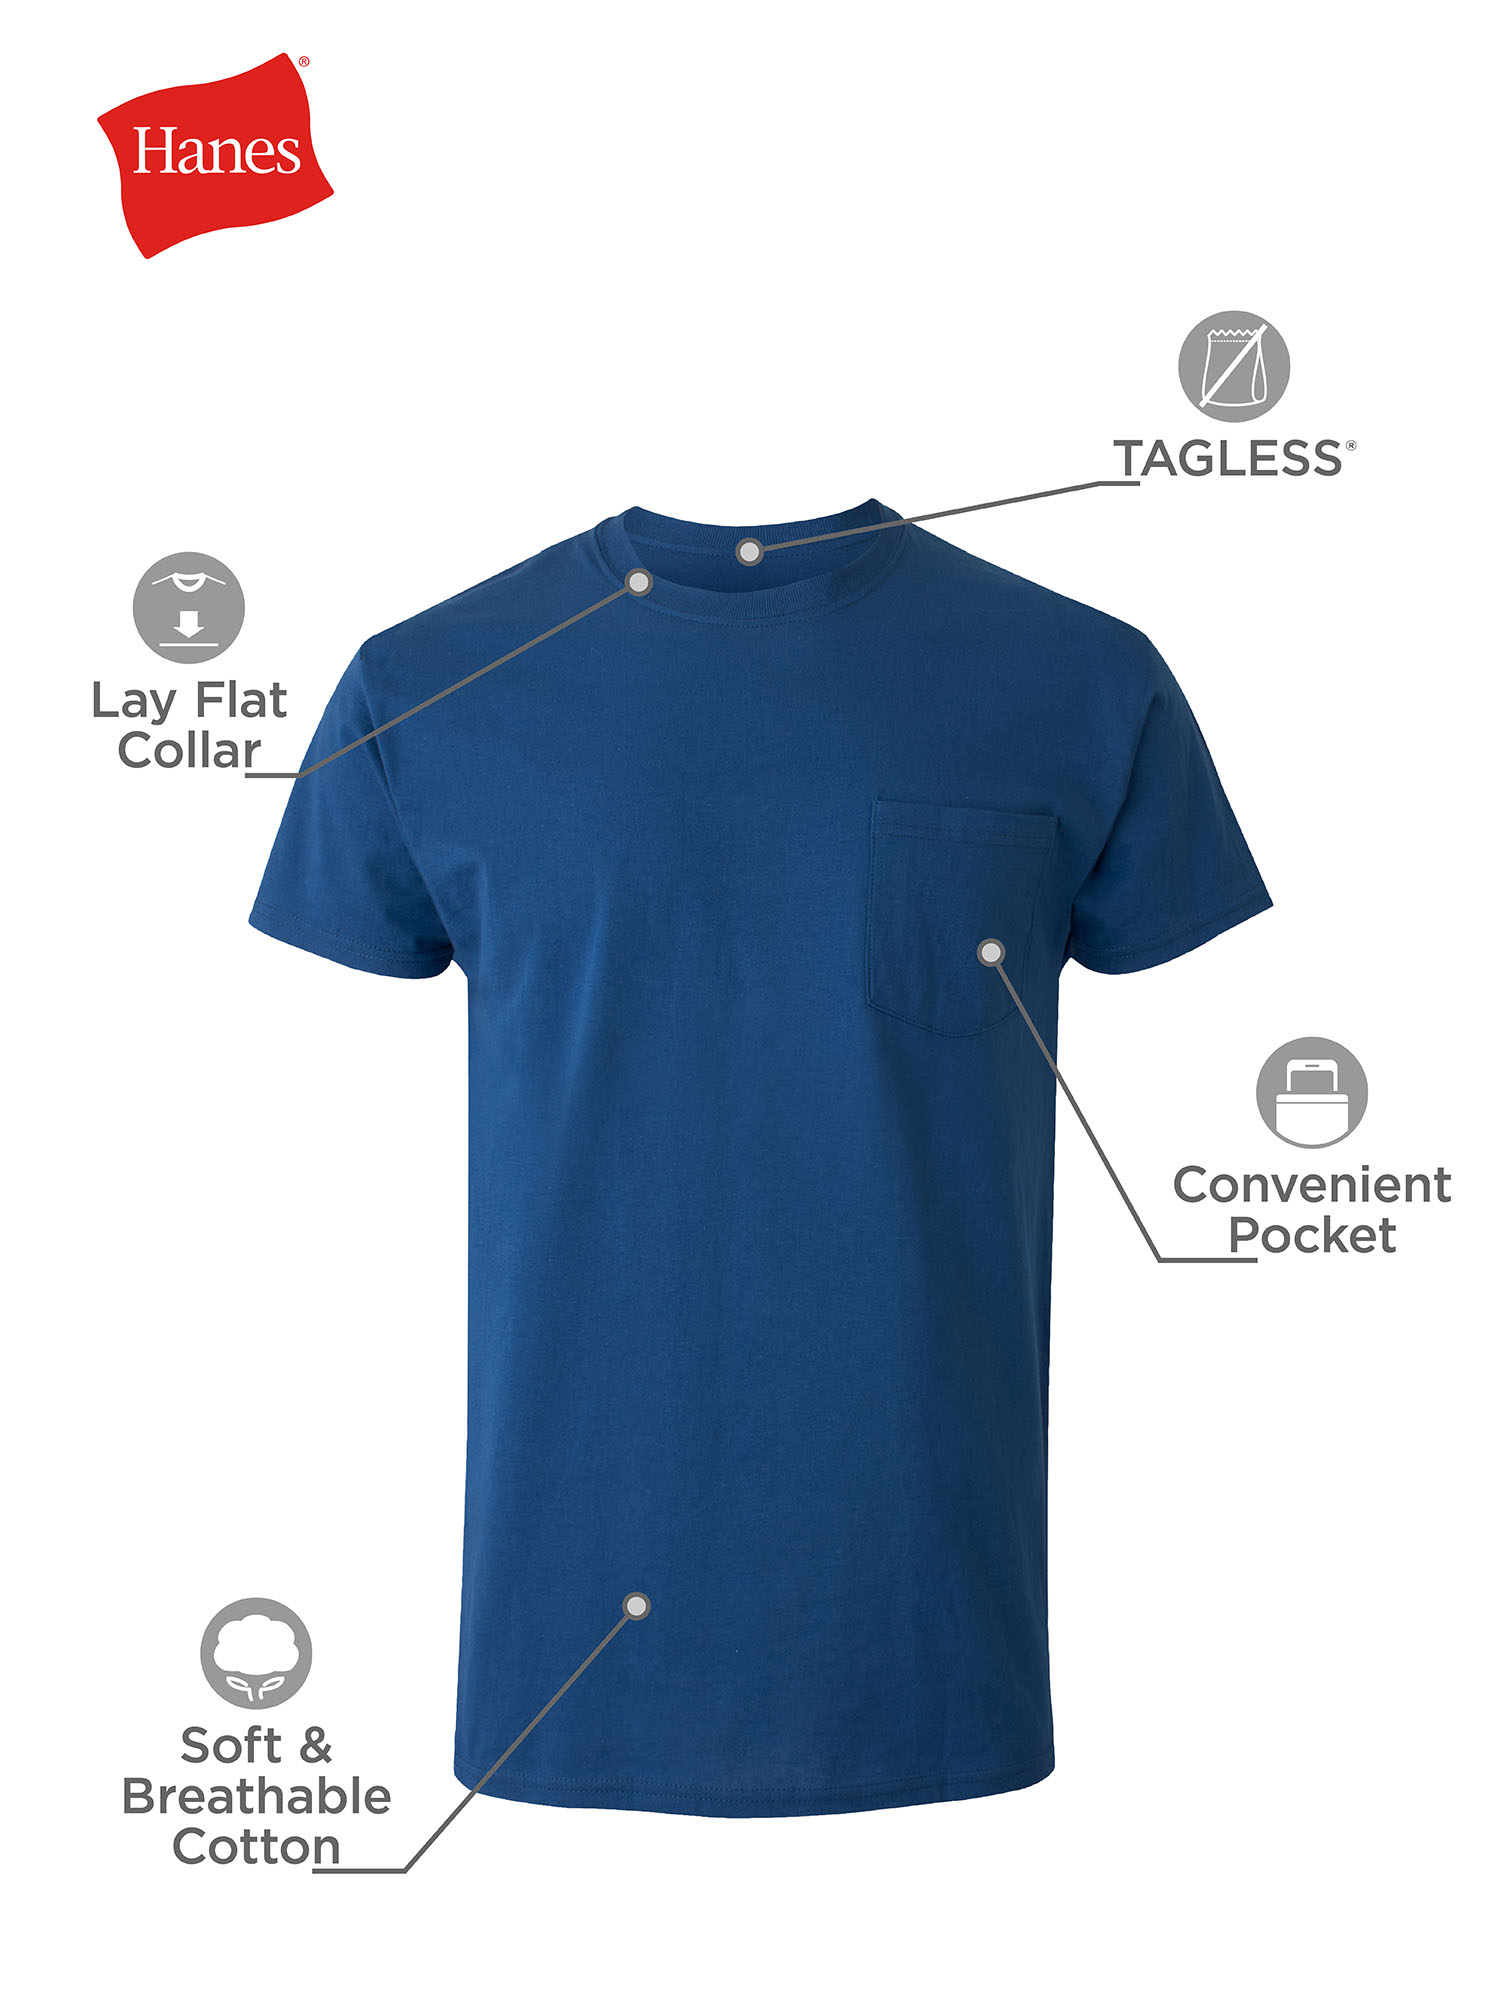 Hanes Men's Value Pack Assorted Pocket T-Shirt Undershirts, 6 Pack - image 4 of 7